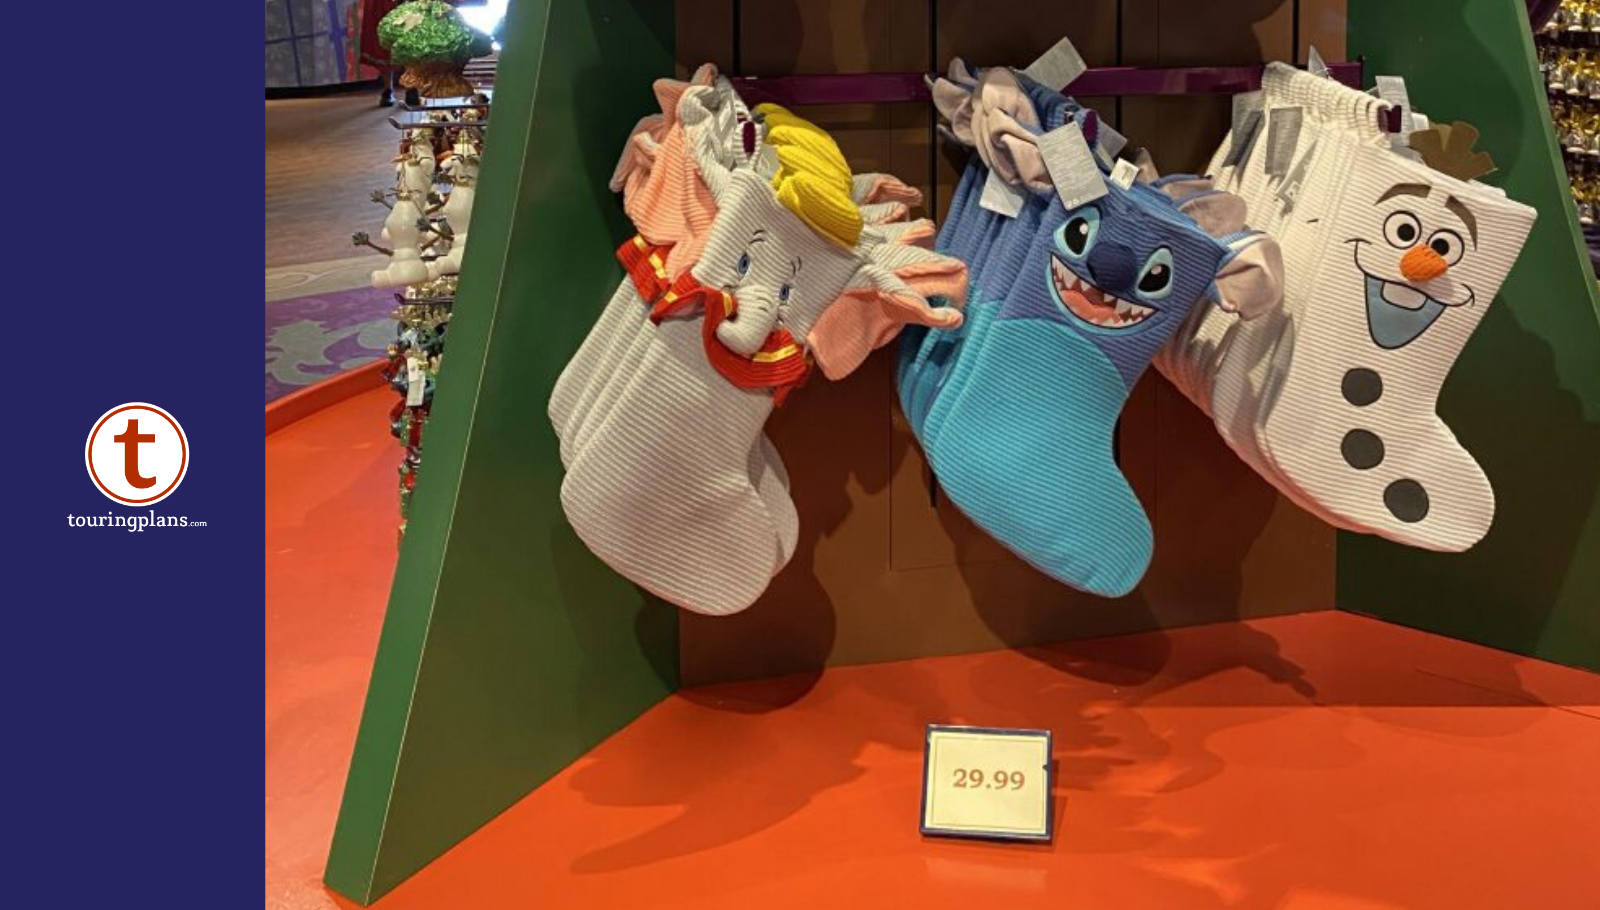 Disney Parks Stitch Knit Christmas Holiday Stocking